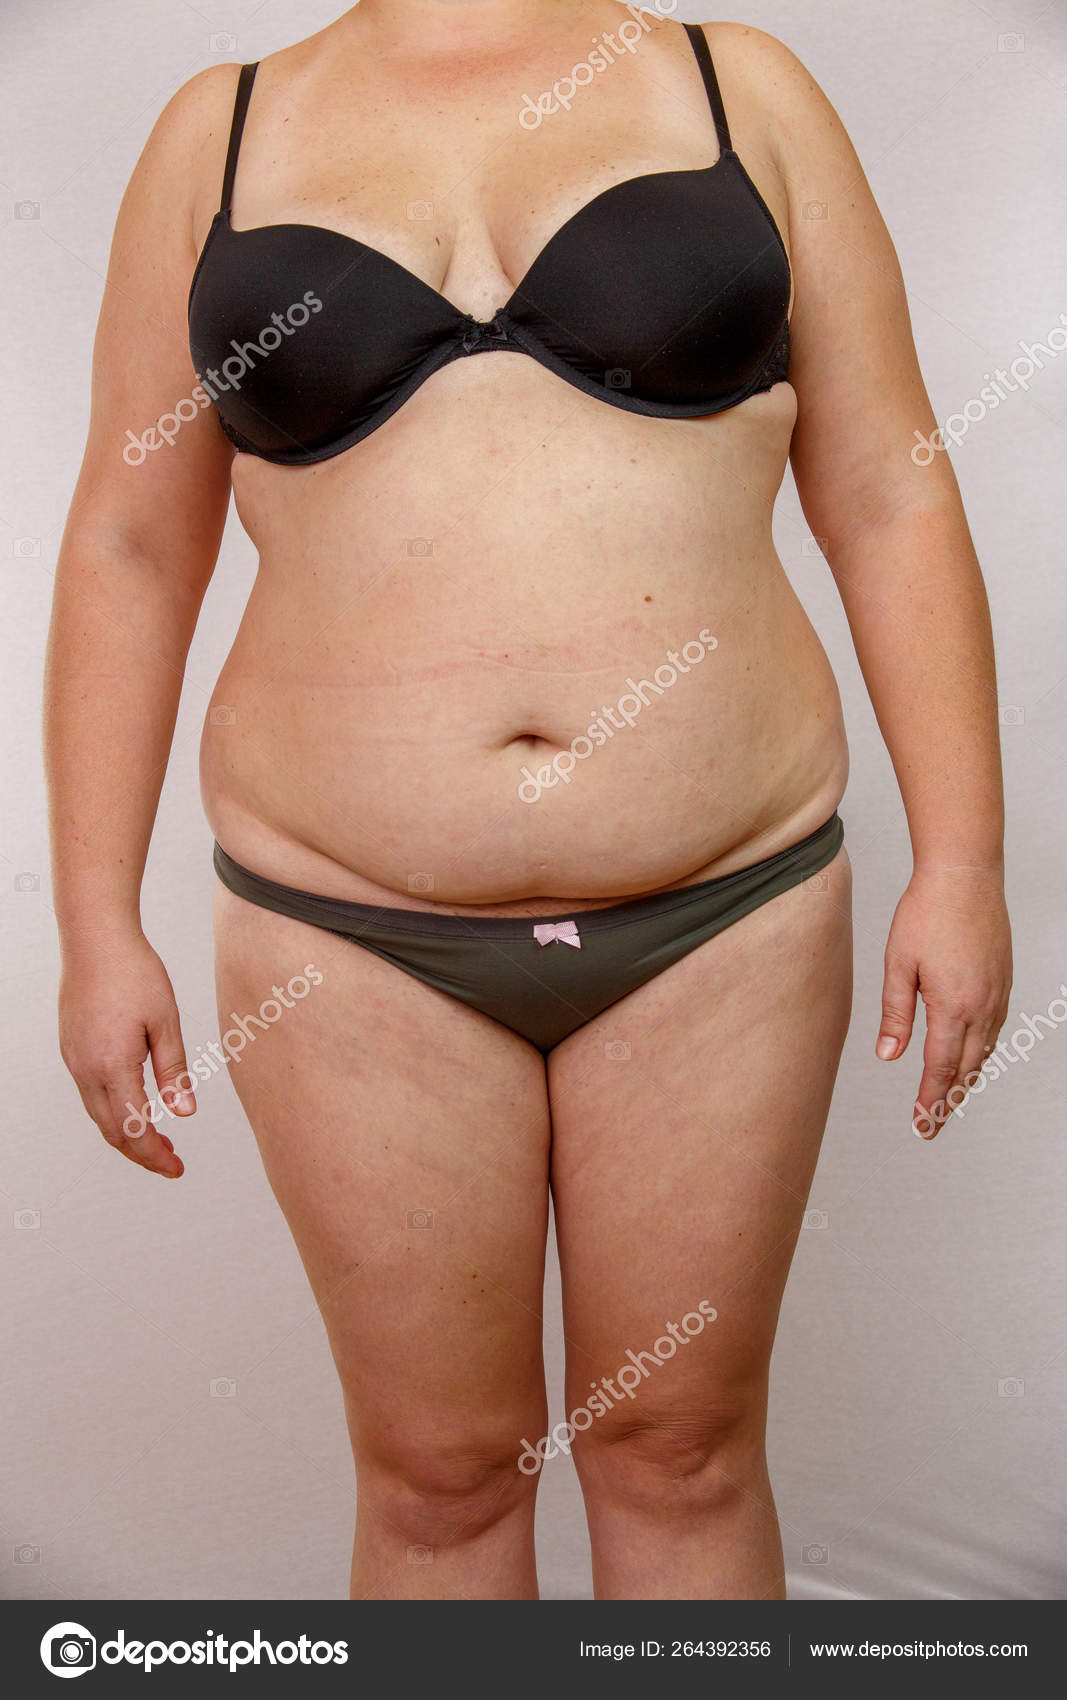 https://st4.depositphotos.com/12149500/26439/i/1600/depositphotos_264392356-stock-photo-obesity-woman-underwear.jpg